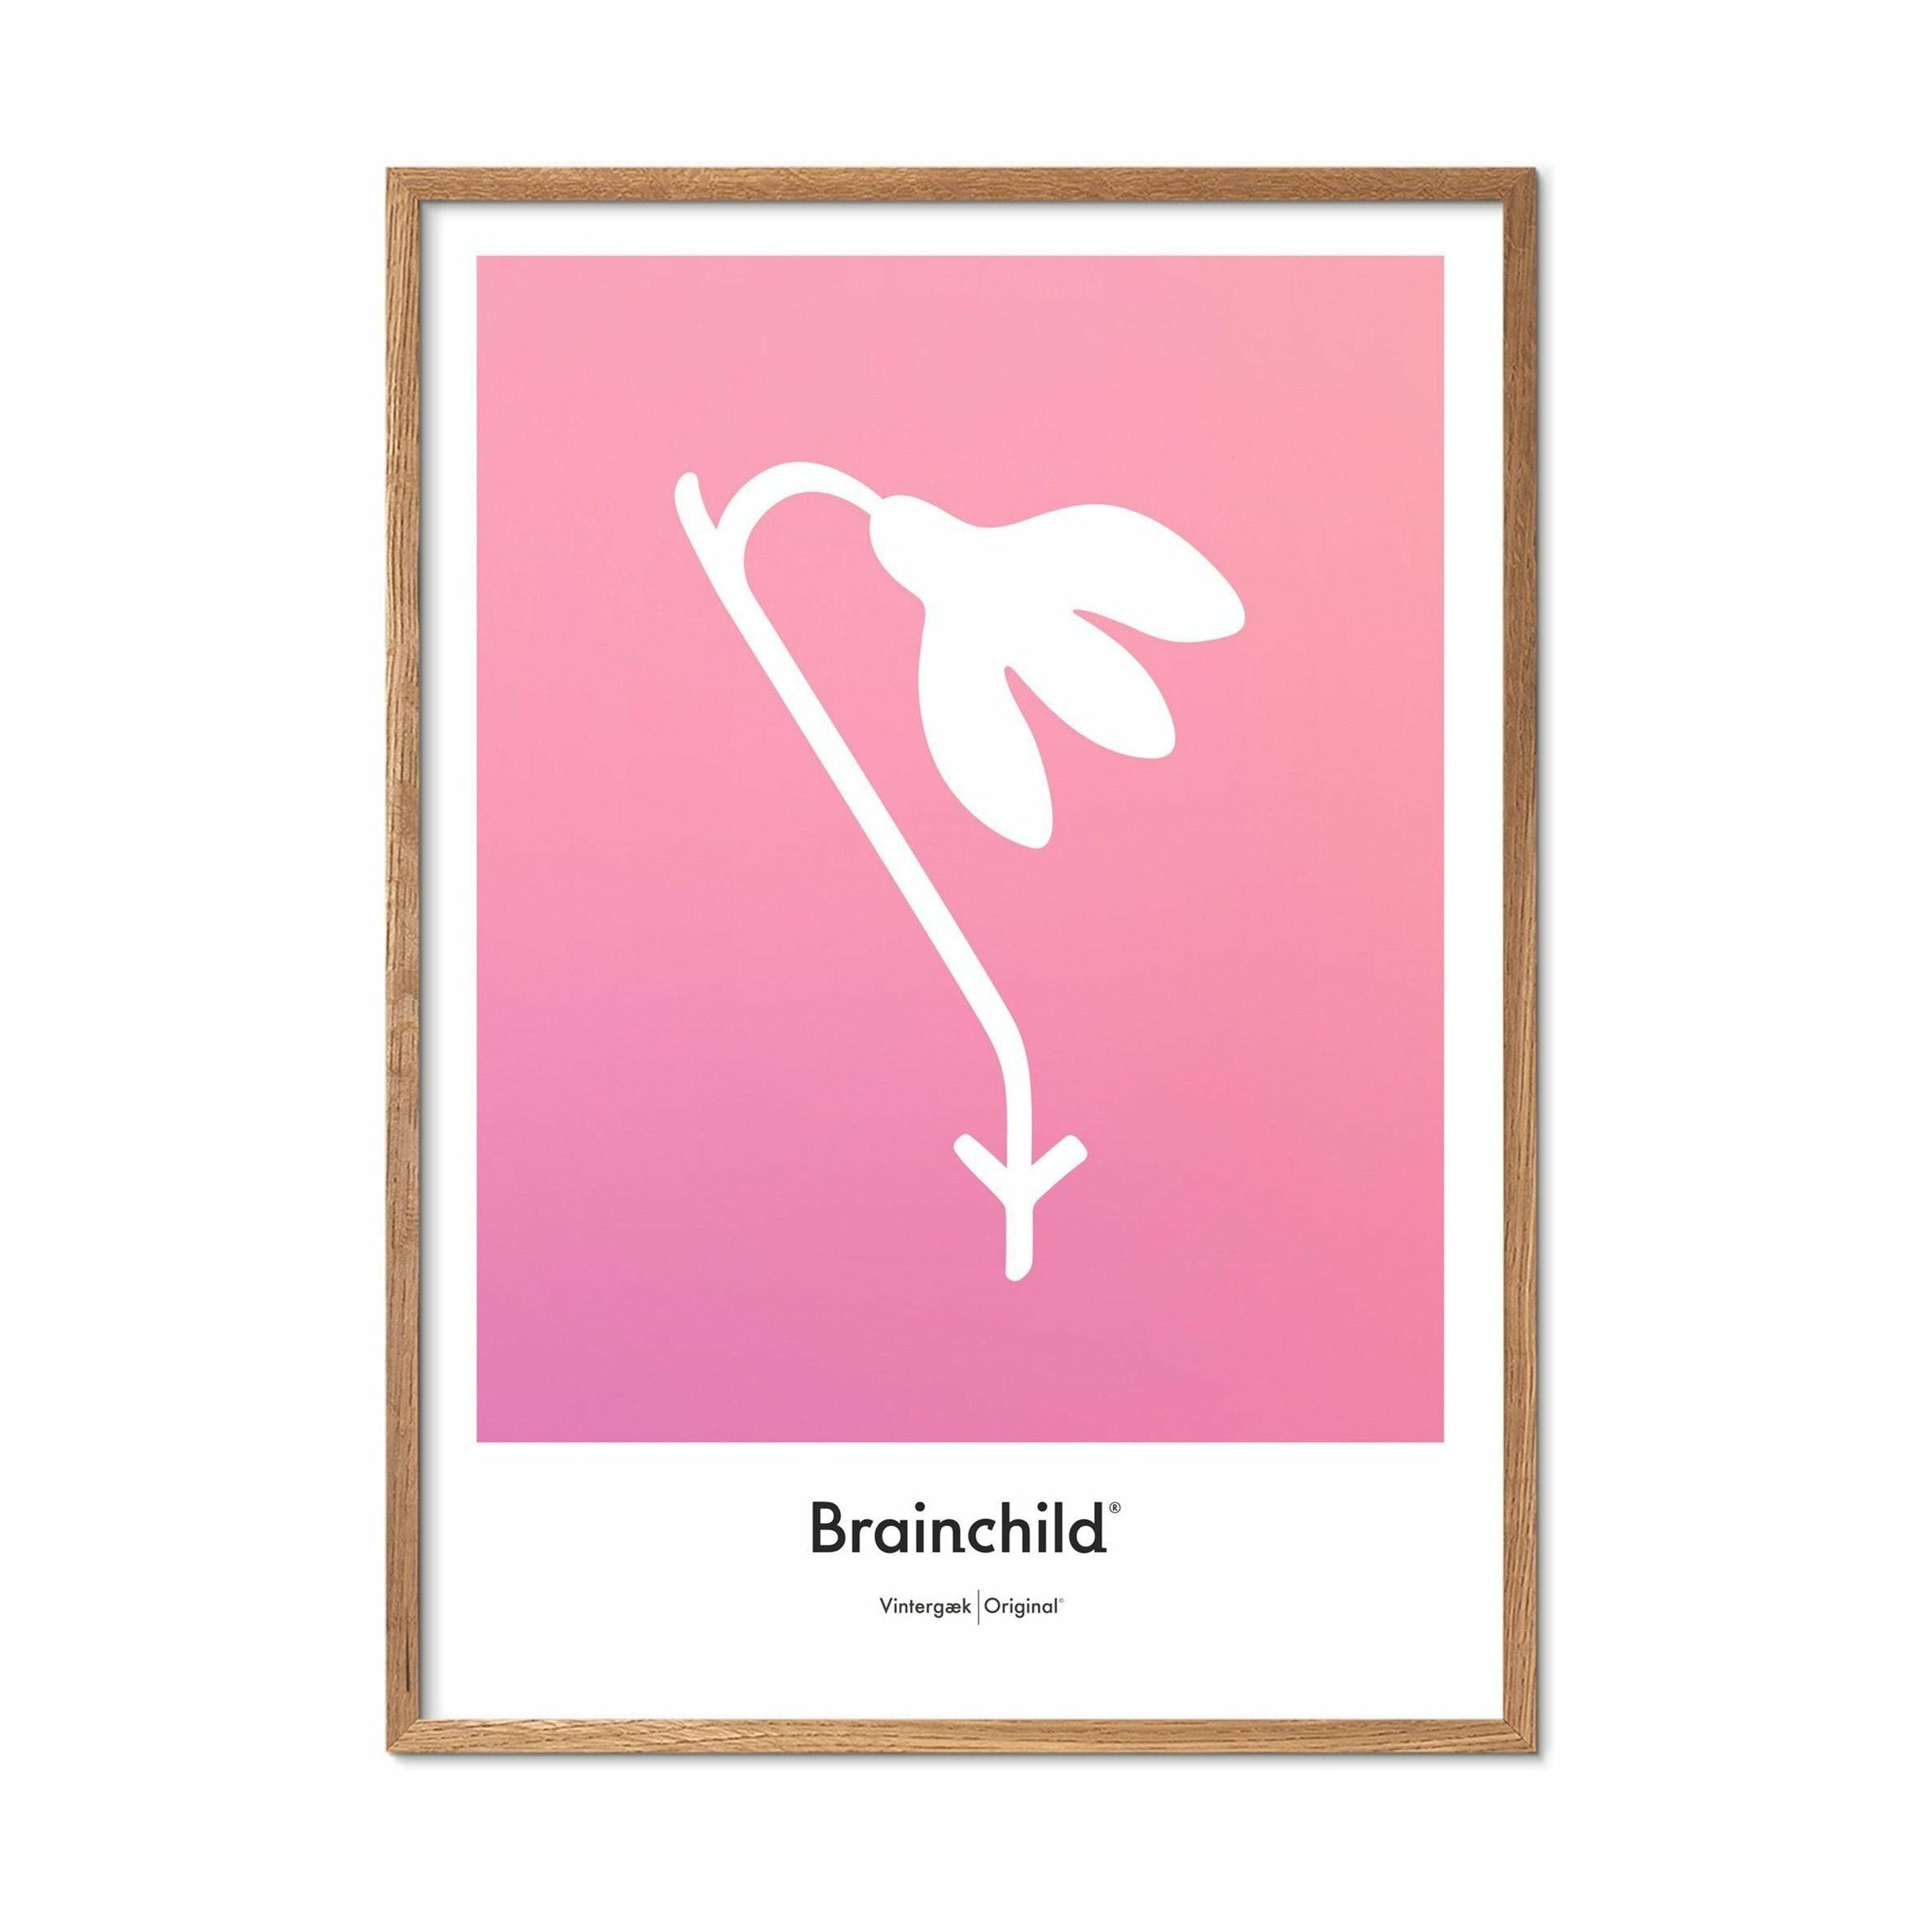 Brainchild Snowdrop Design Icon Poster, Frame Made Of Light Wood 30x40 Cm, Pink